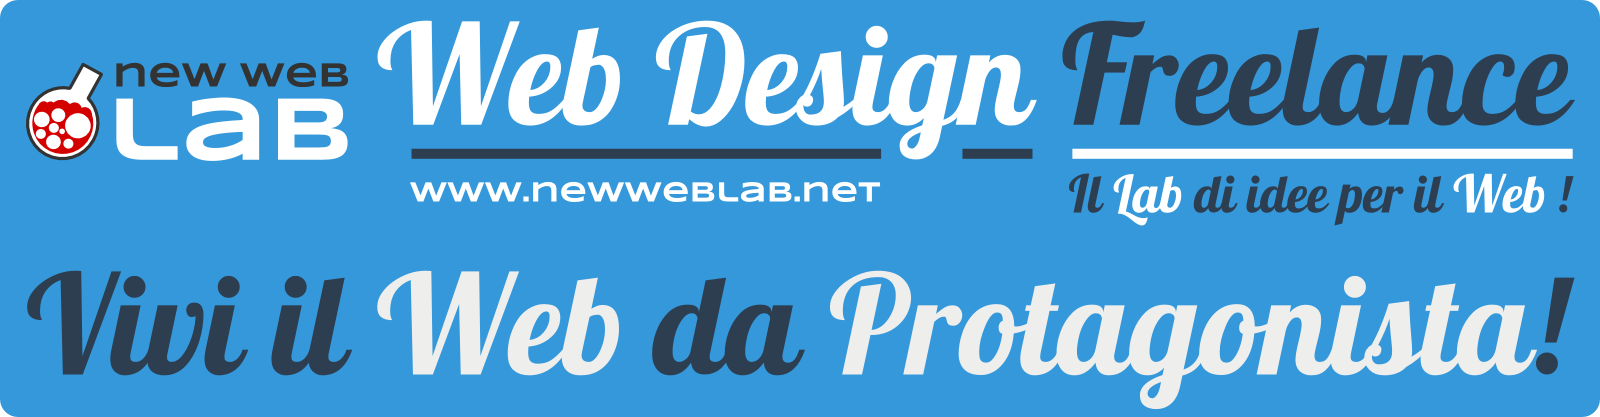 New Web Lab - Web Design Freelance